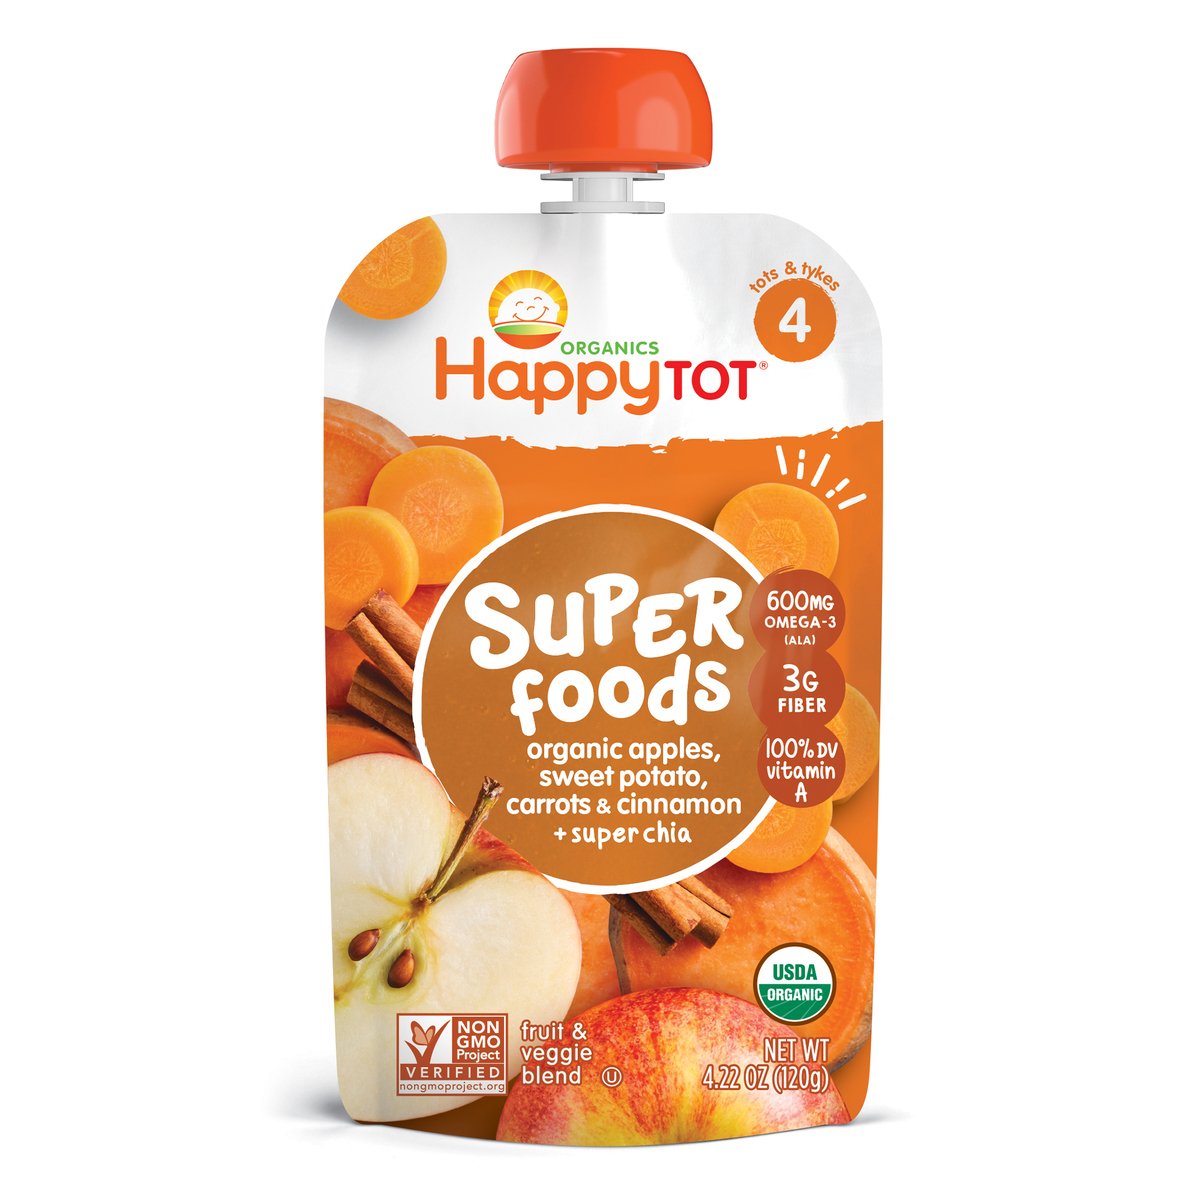 Happy Family Stage 4 Organic Apples, Sweet Potato, Carrots & Cinnamon + Super Chia Super Foods 120 g